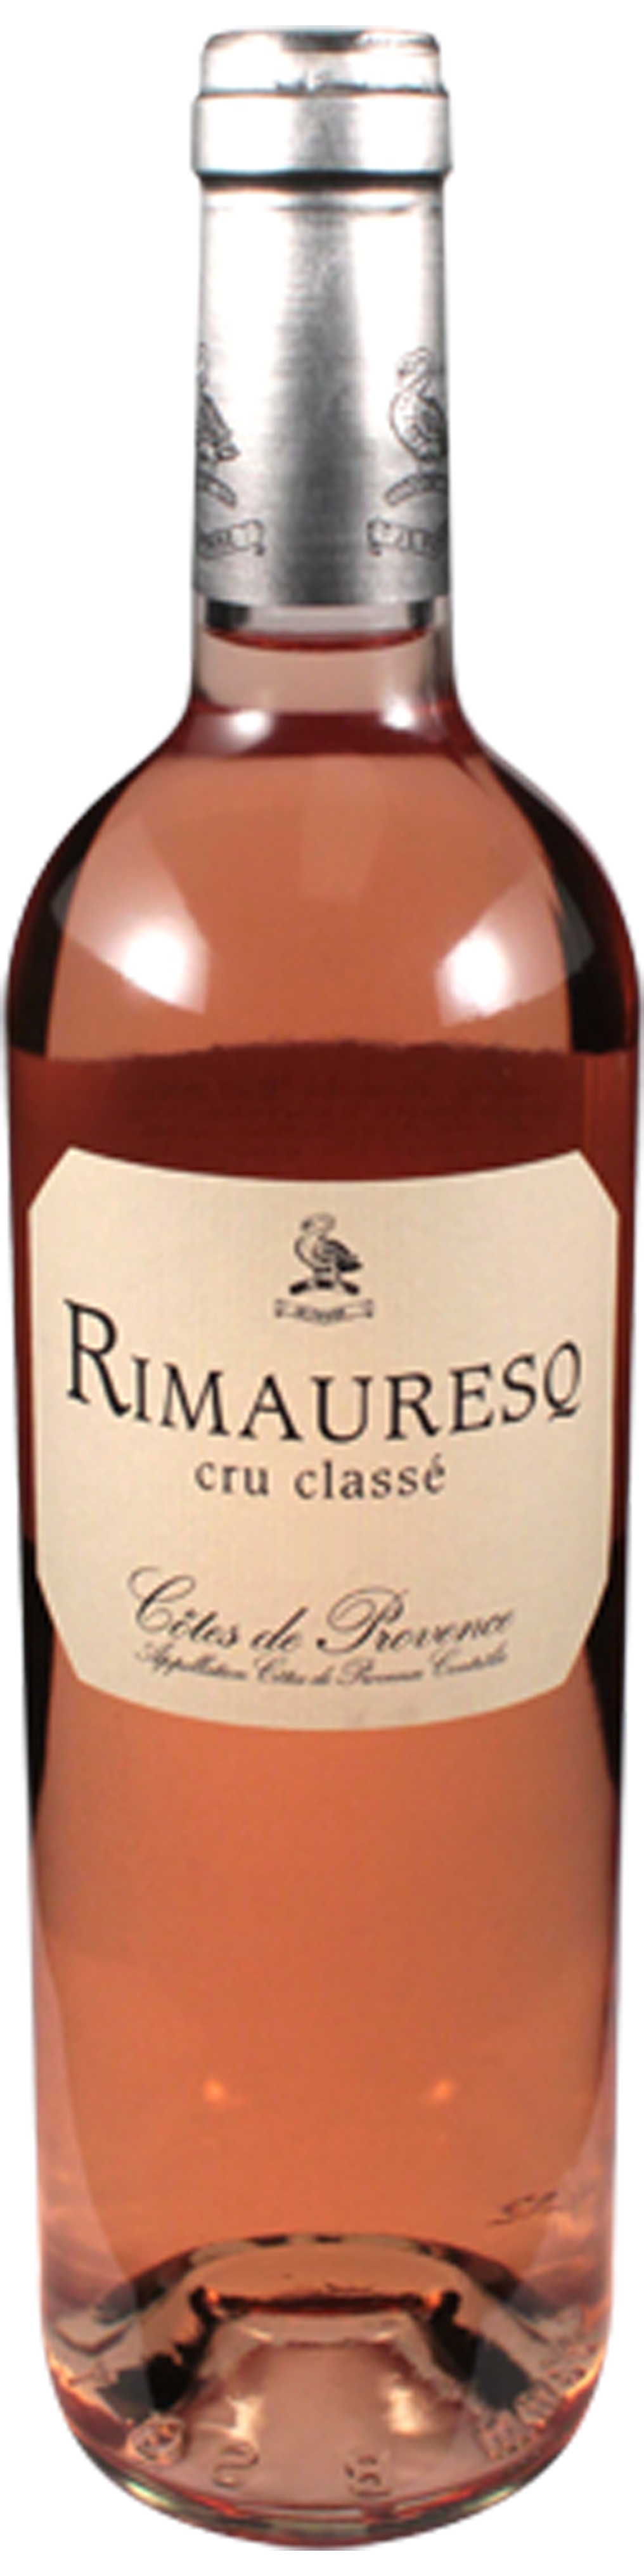 Bottle shot of 2010 Rimauresq Rosé